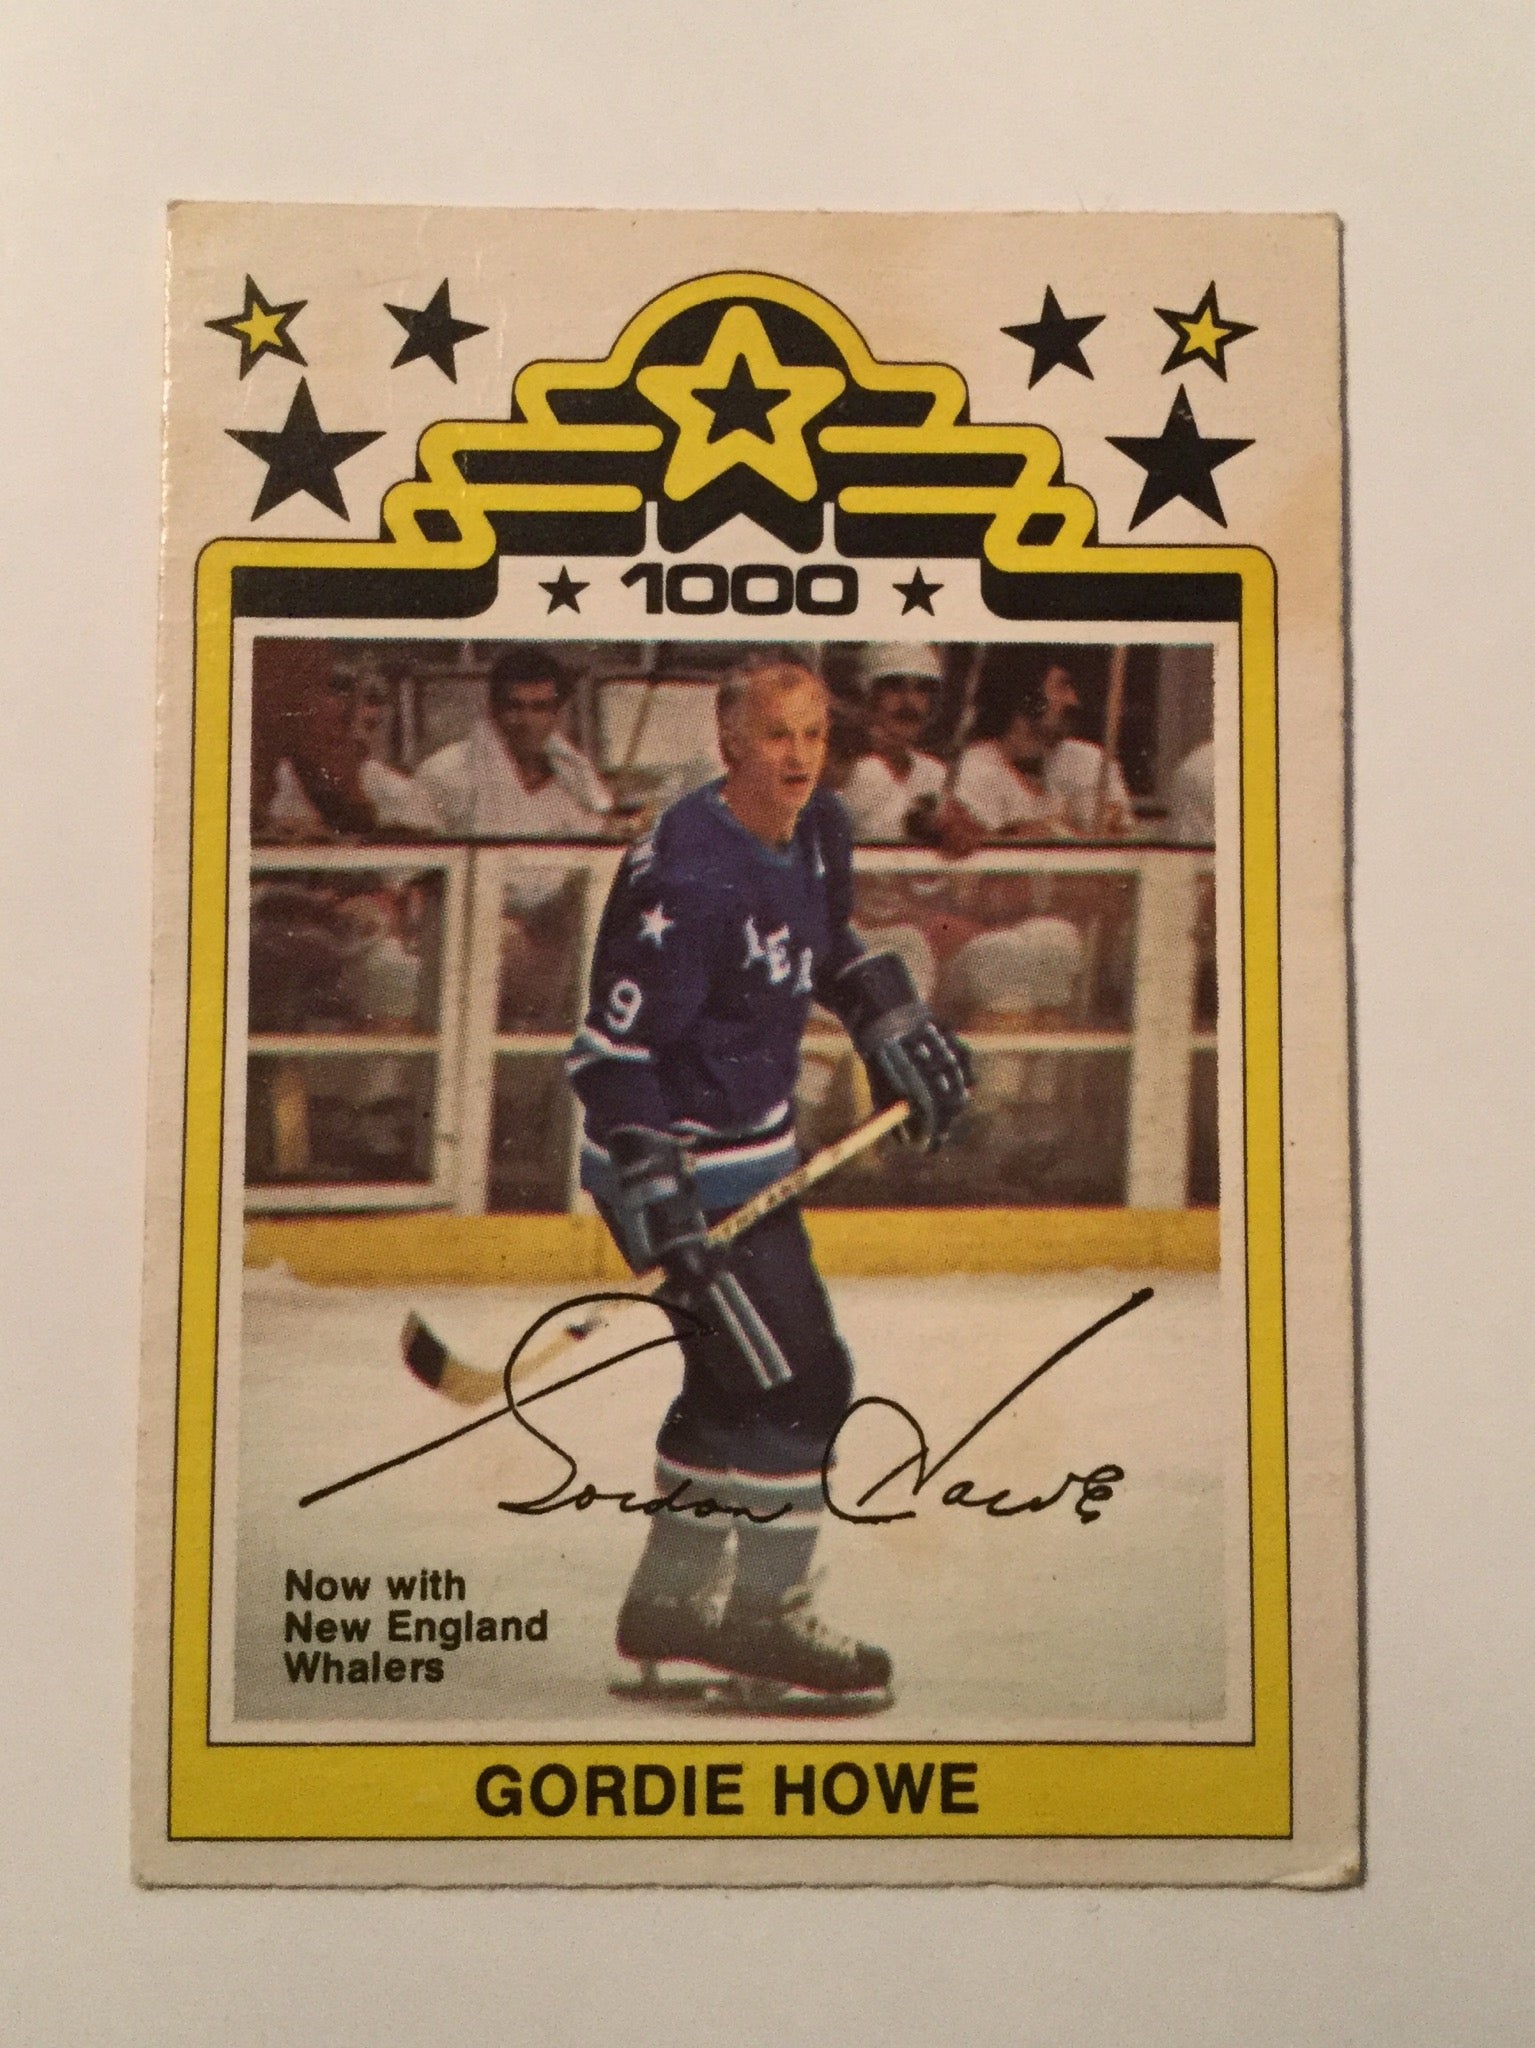 Gordie Howe WHA rare hockey card 1970s